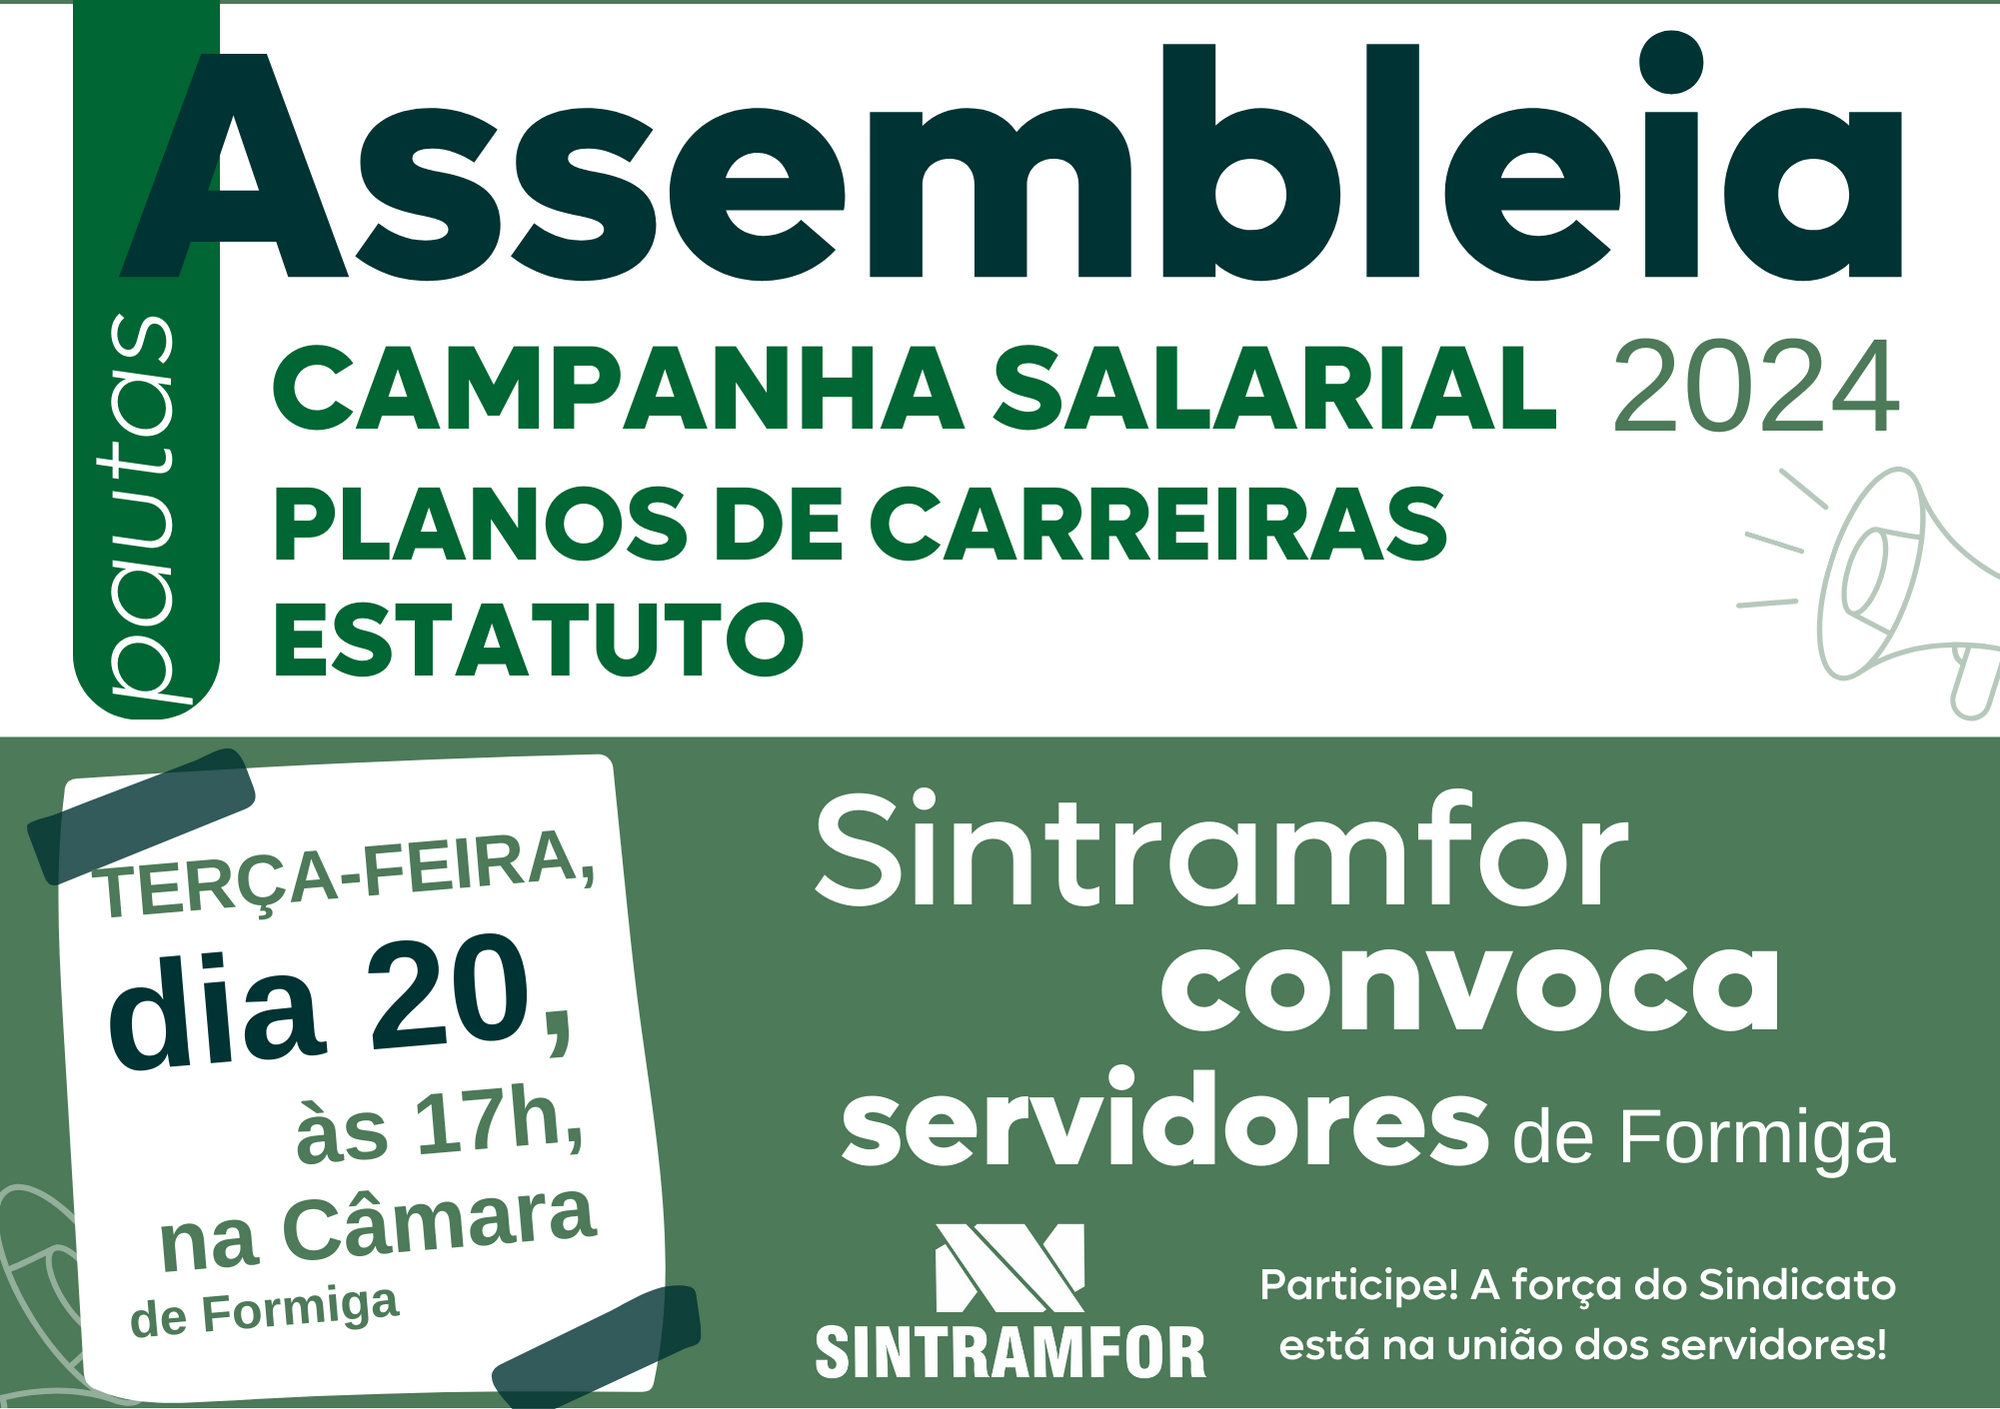 terceira_assembleia_campanha_salarial_2024 (210 x 148 mm) (2)